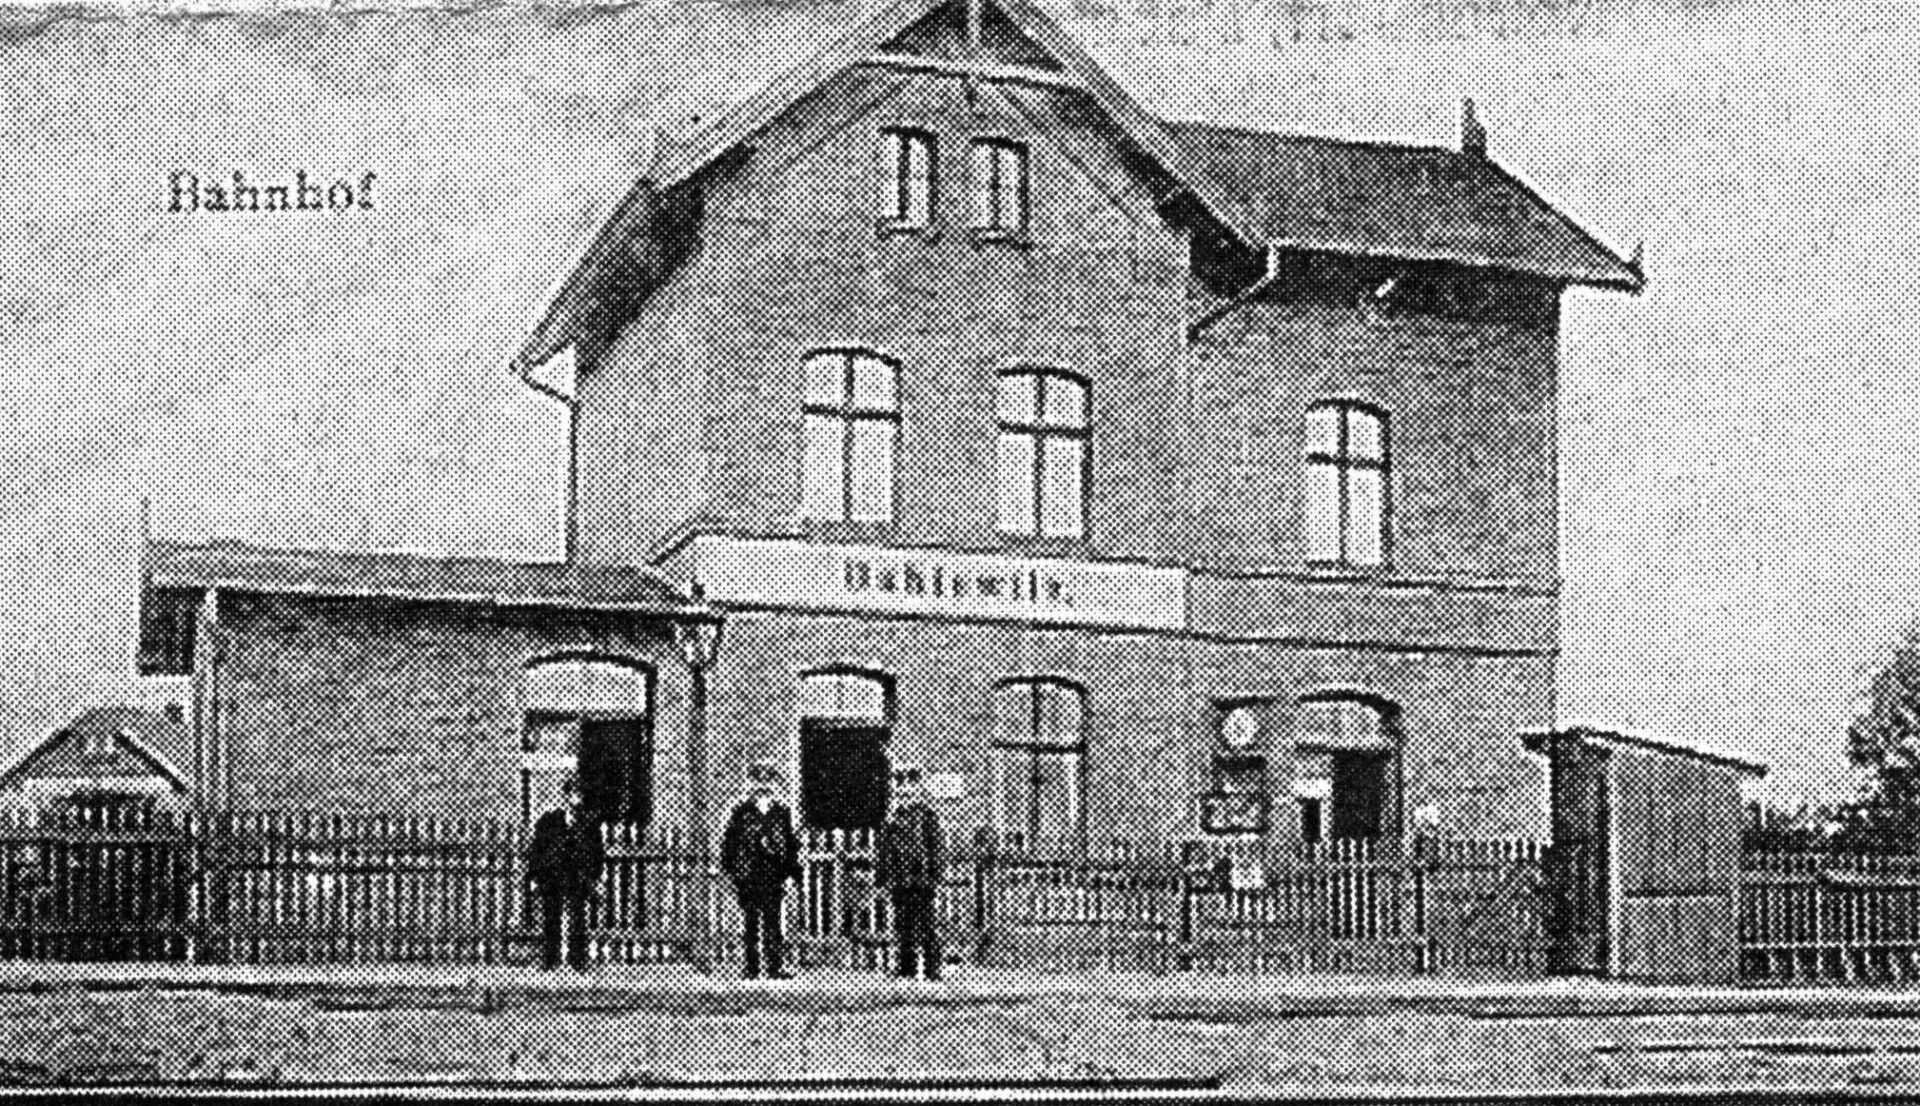 Bahnhof Dahlewitz - 1909